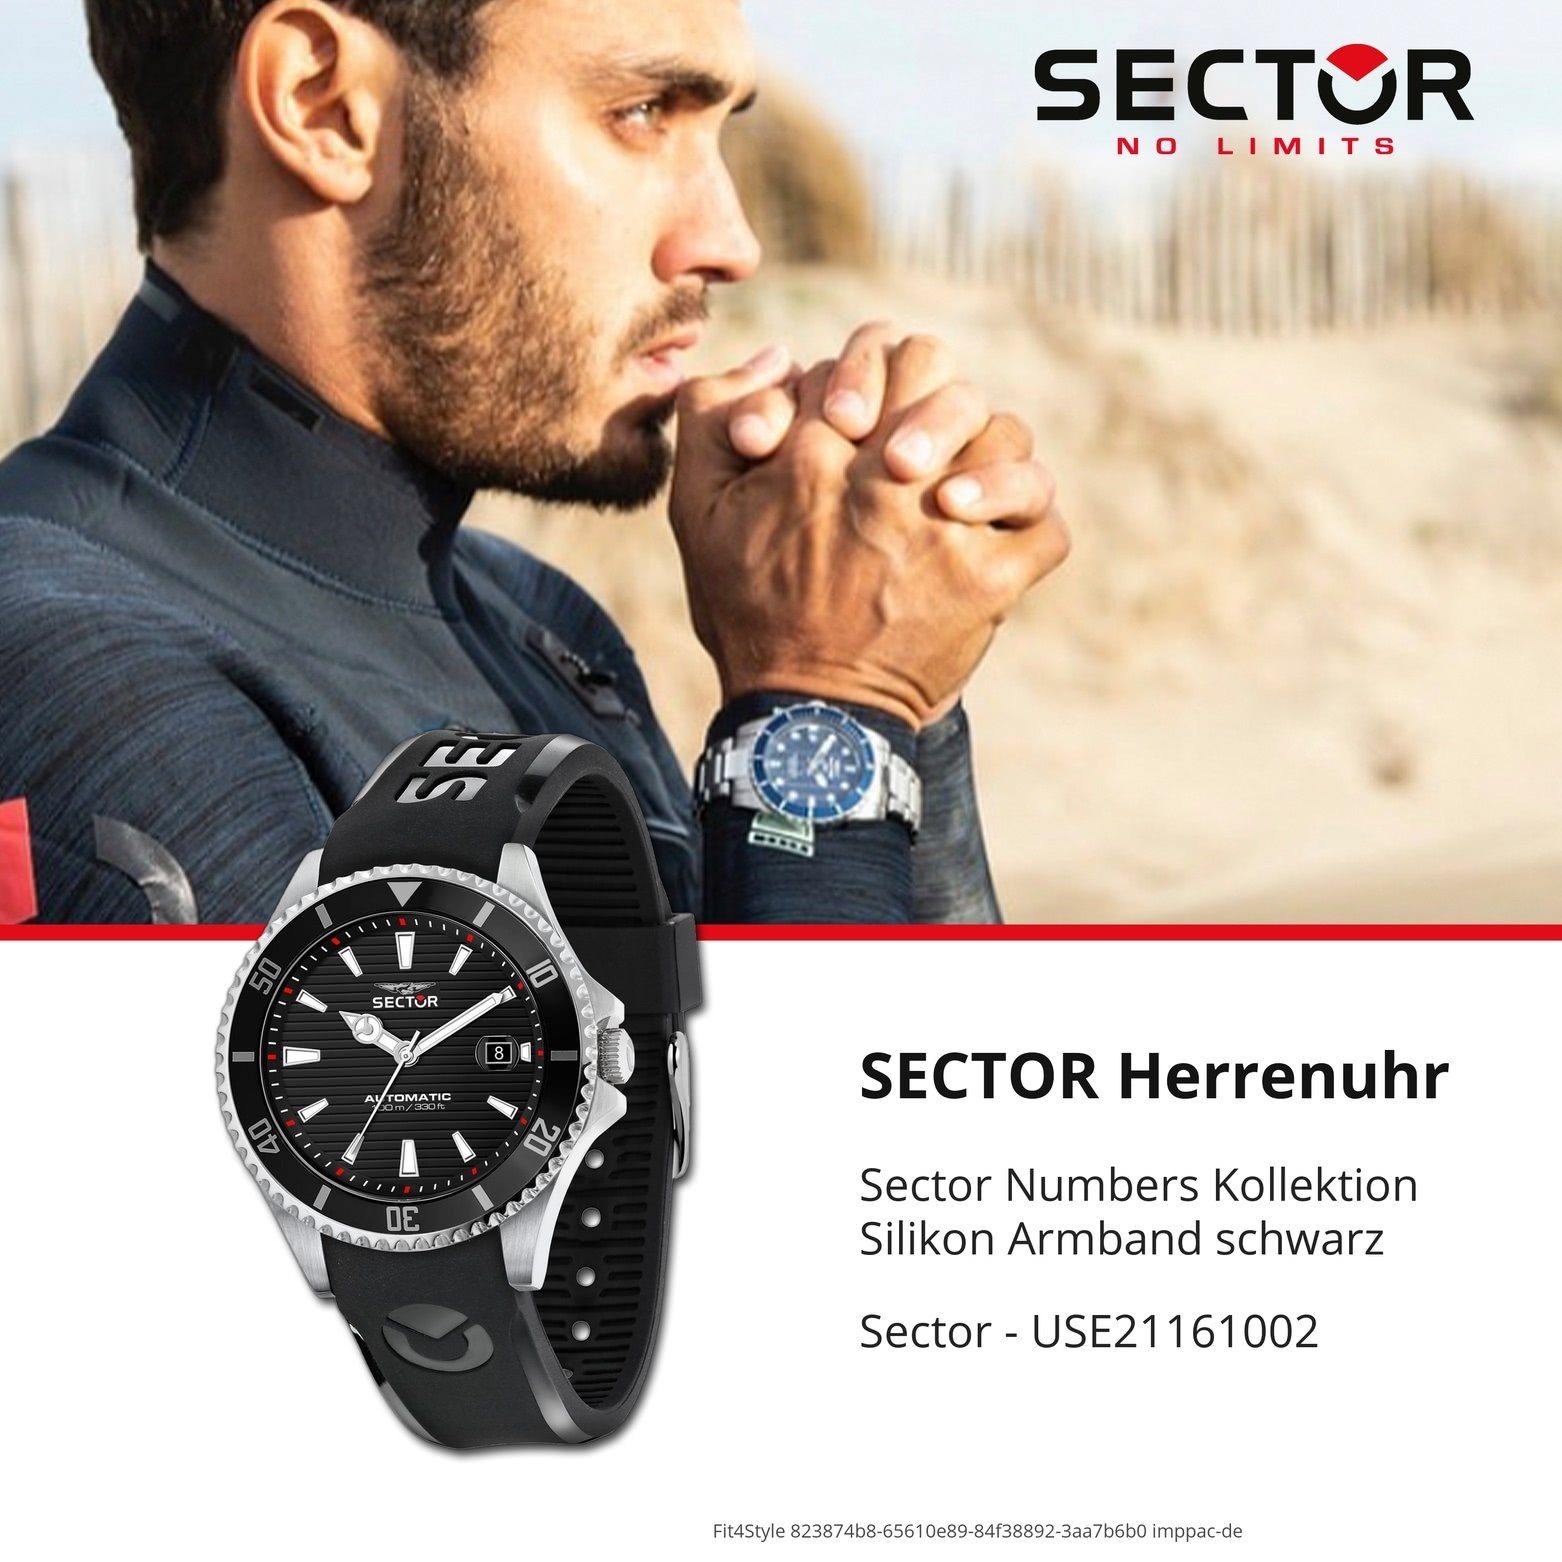 Herren Sector Sector Analog, Armbanduhr Herren rund, Casual schwarz, Armbanduhr Silikonarmband Quarzuhr groß (43mm),